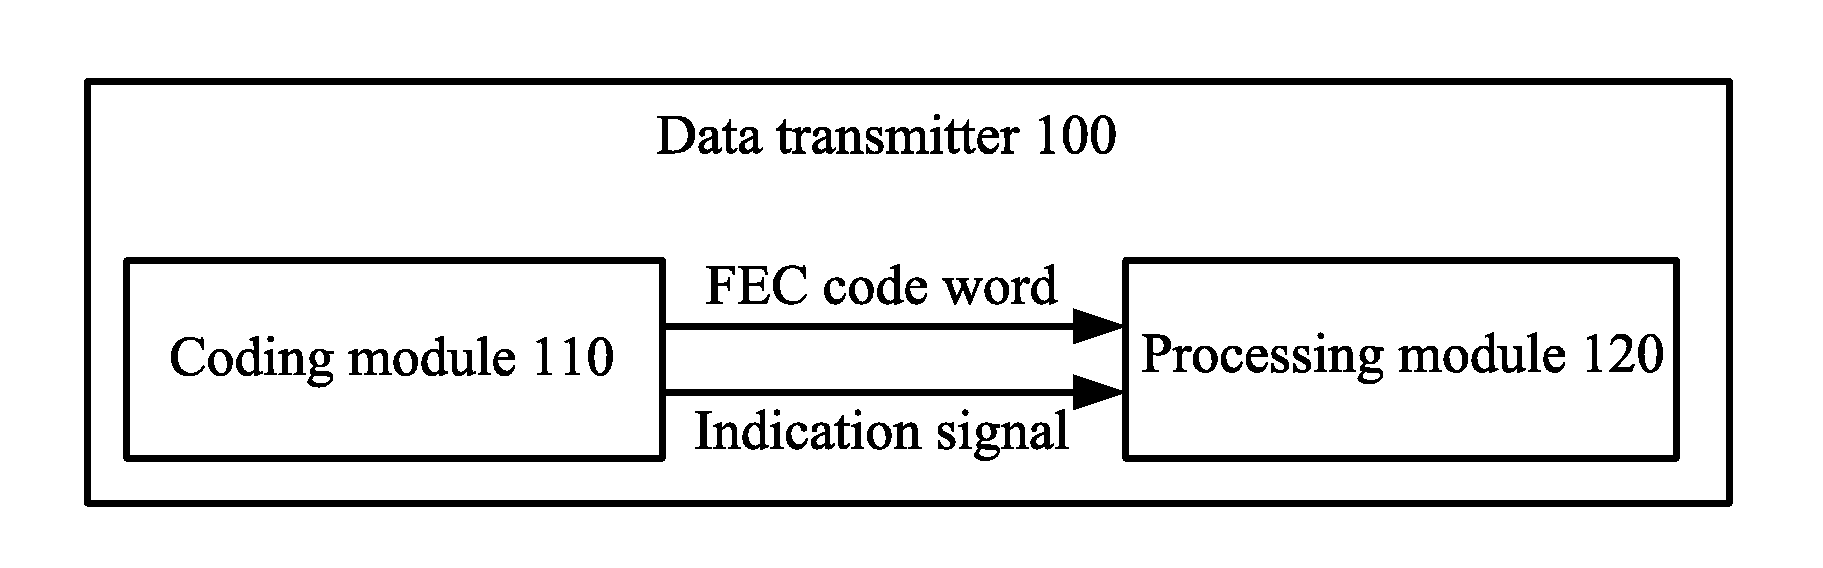 Data Transmitter, Data Receiver, and Frame Synchronization Method